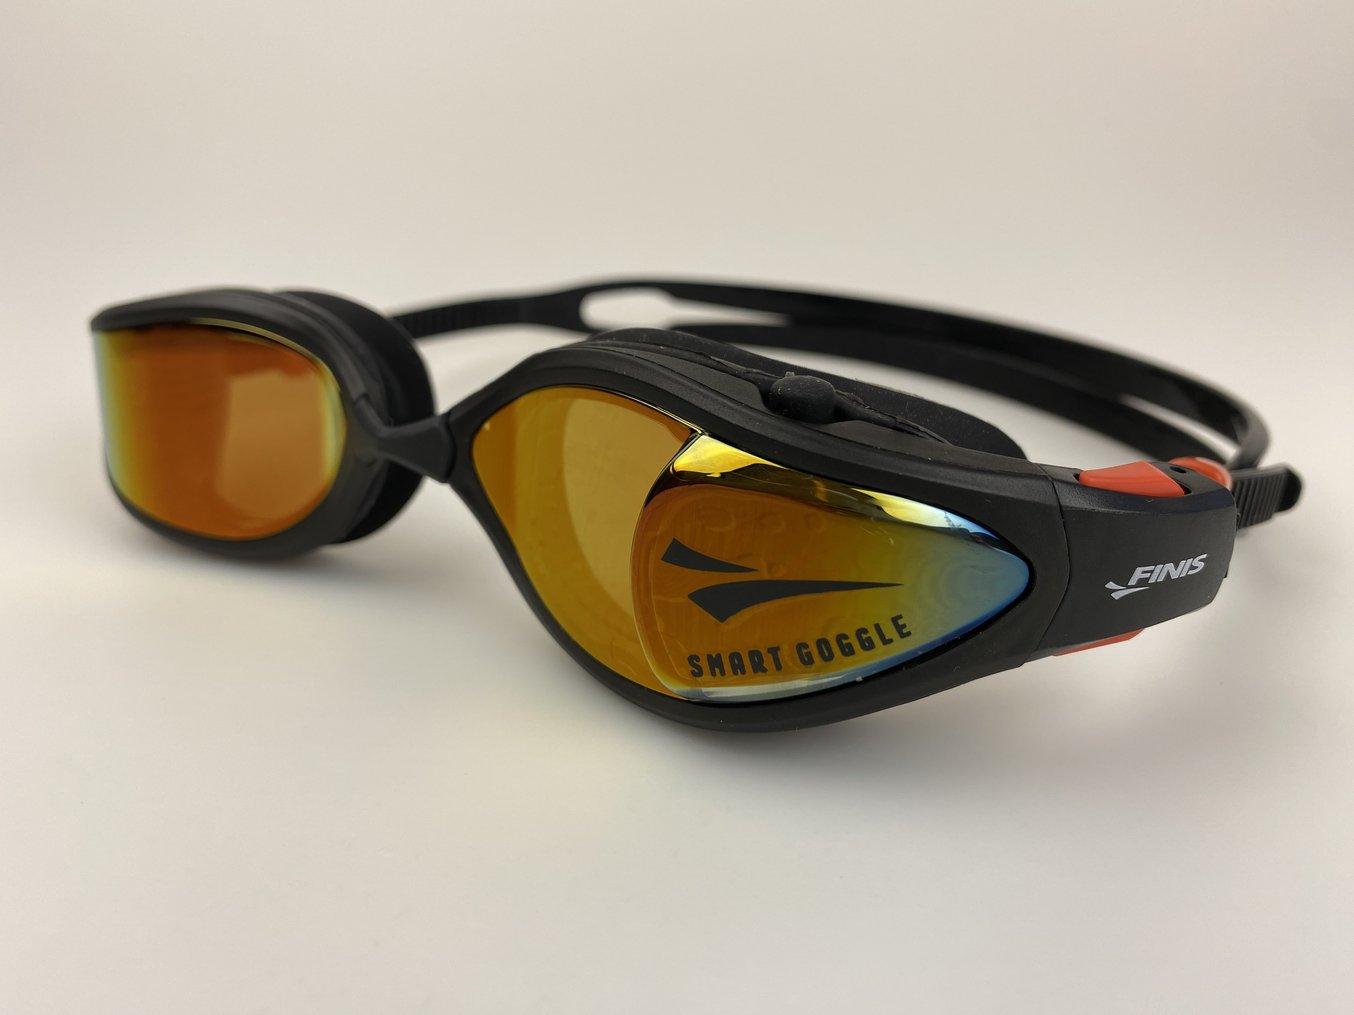 FINIS, Inc. 开发的 Smart Goggle Max